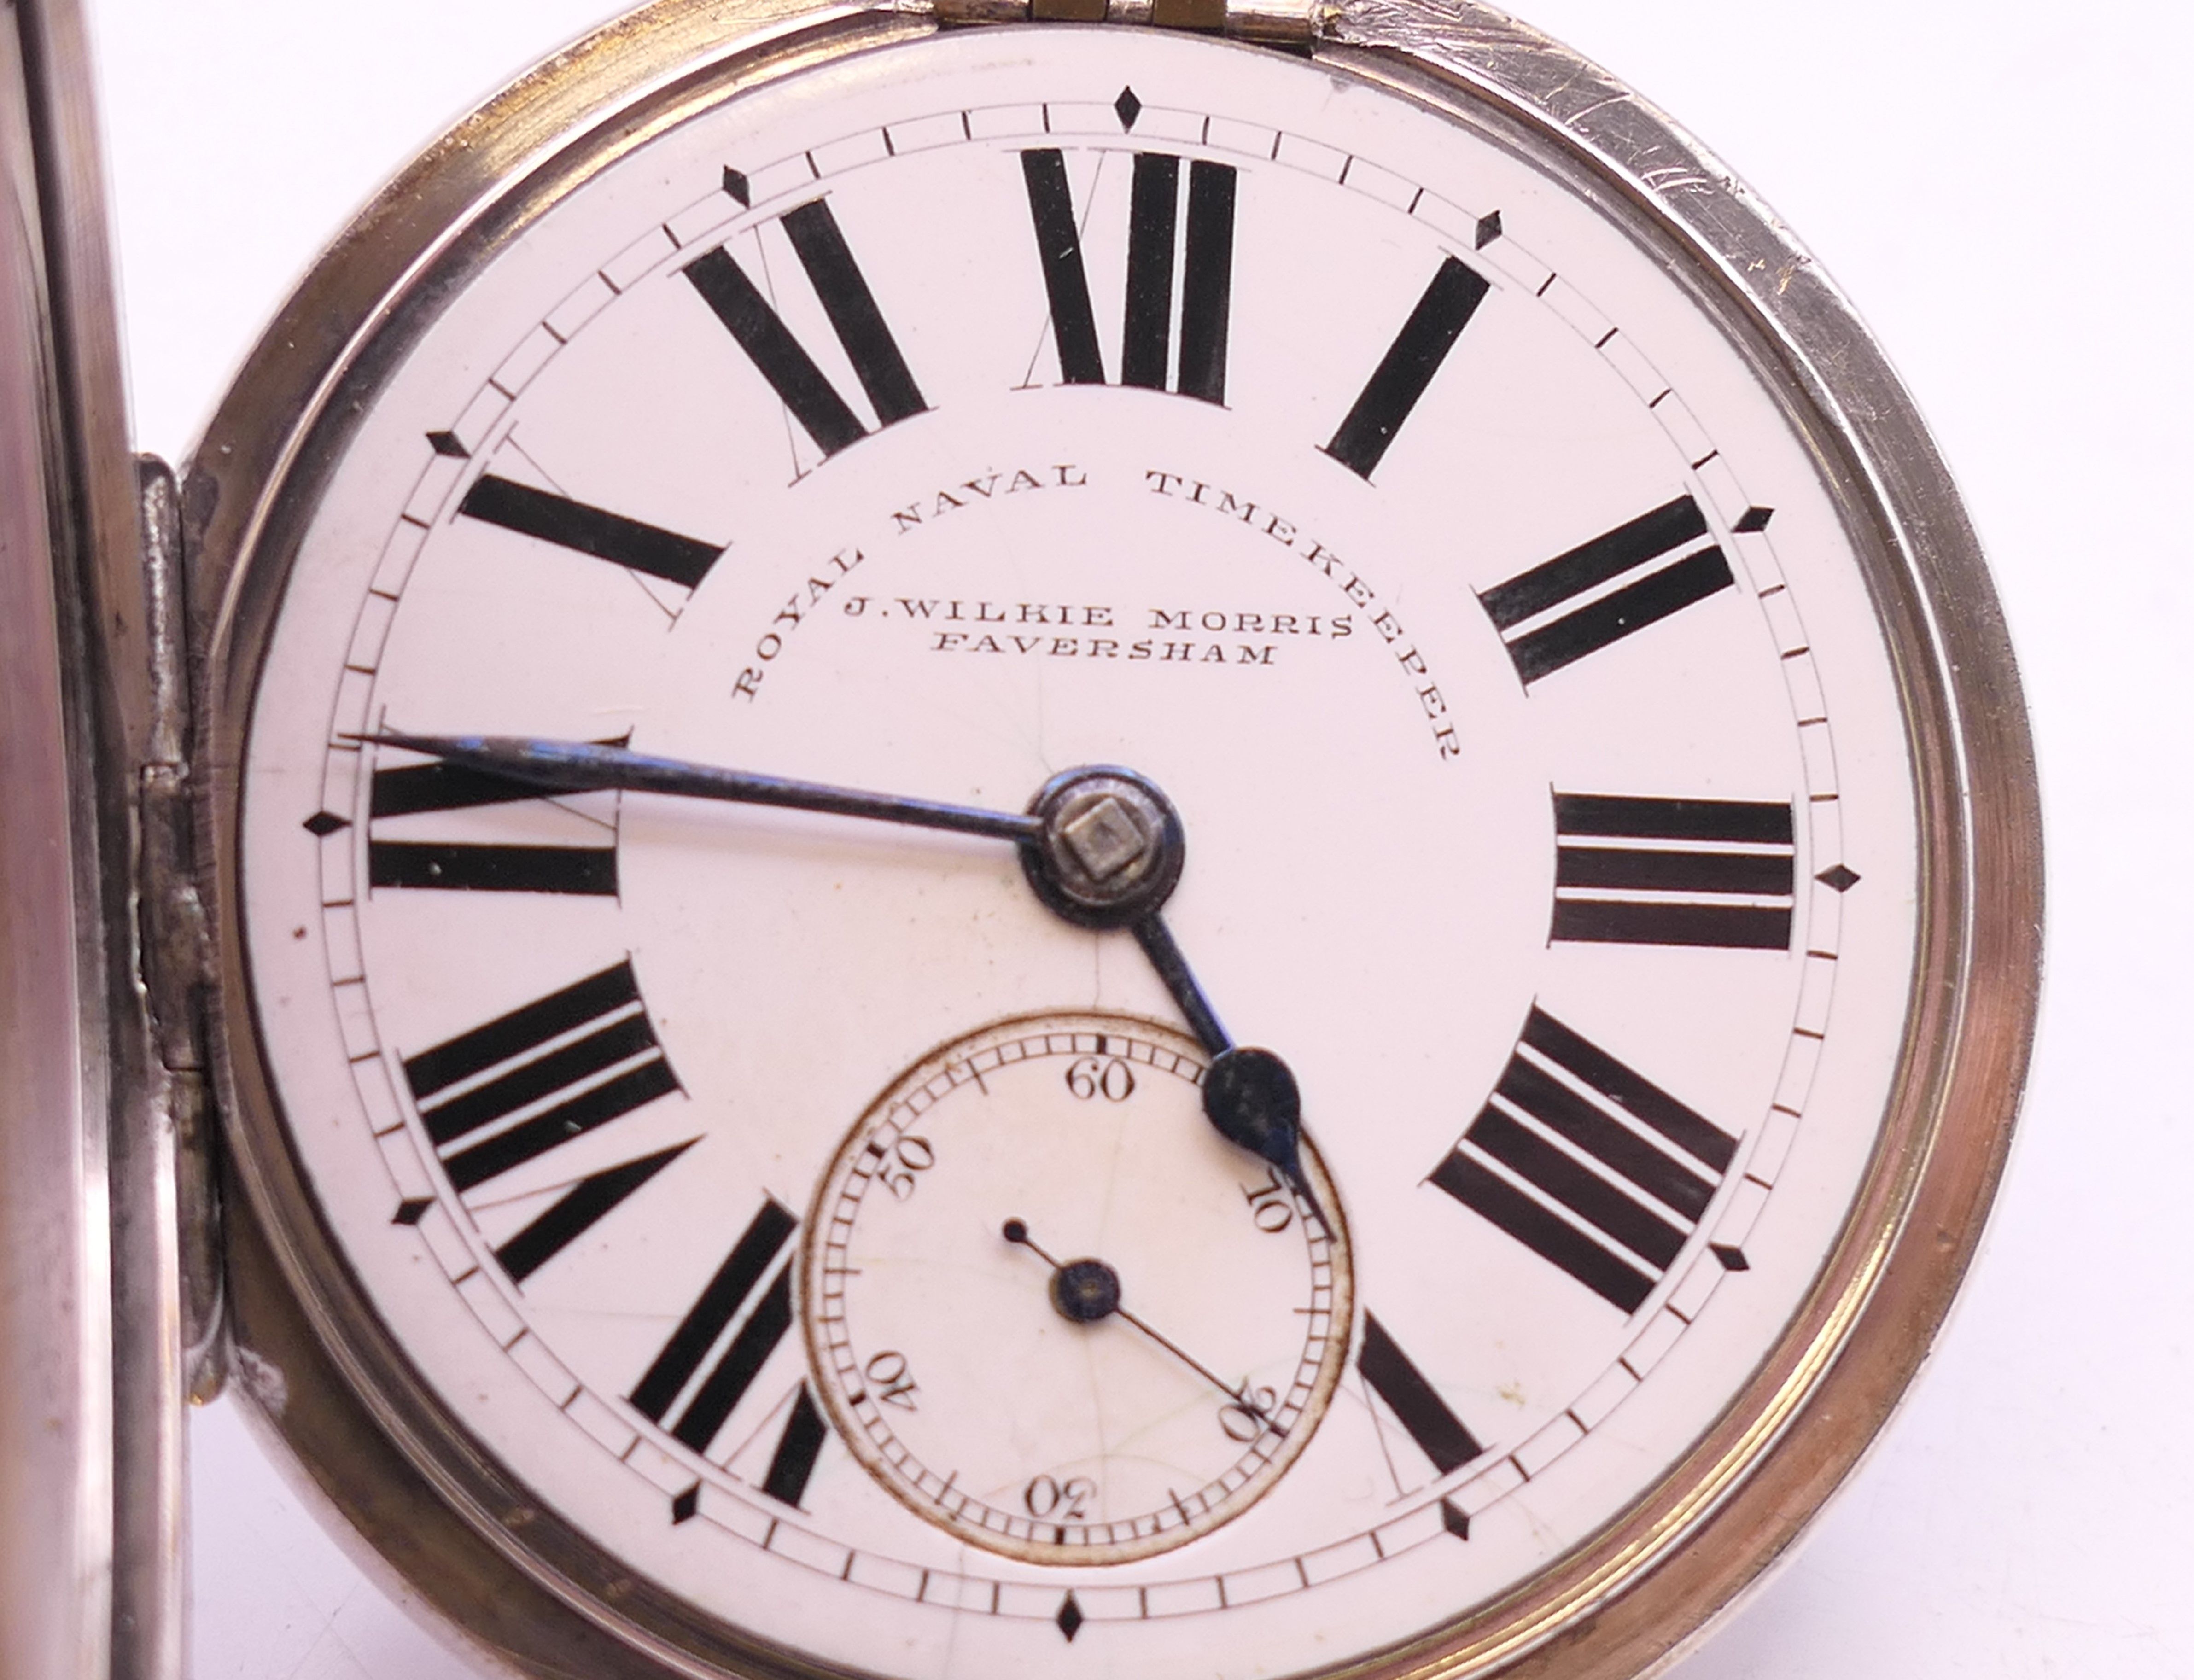 A J Wilkie Morris of Faversham Royal Naval Timekeeper silver pocket watch, hallmarked Chester 1893. - Image 5 of 7